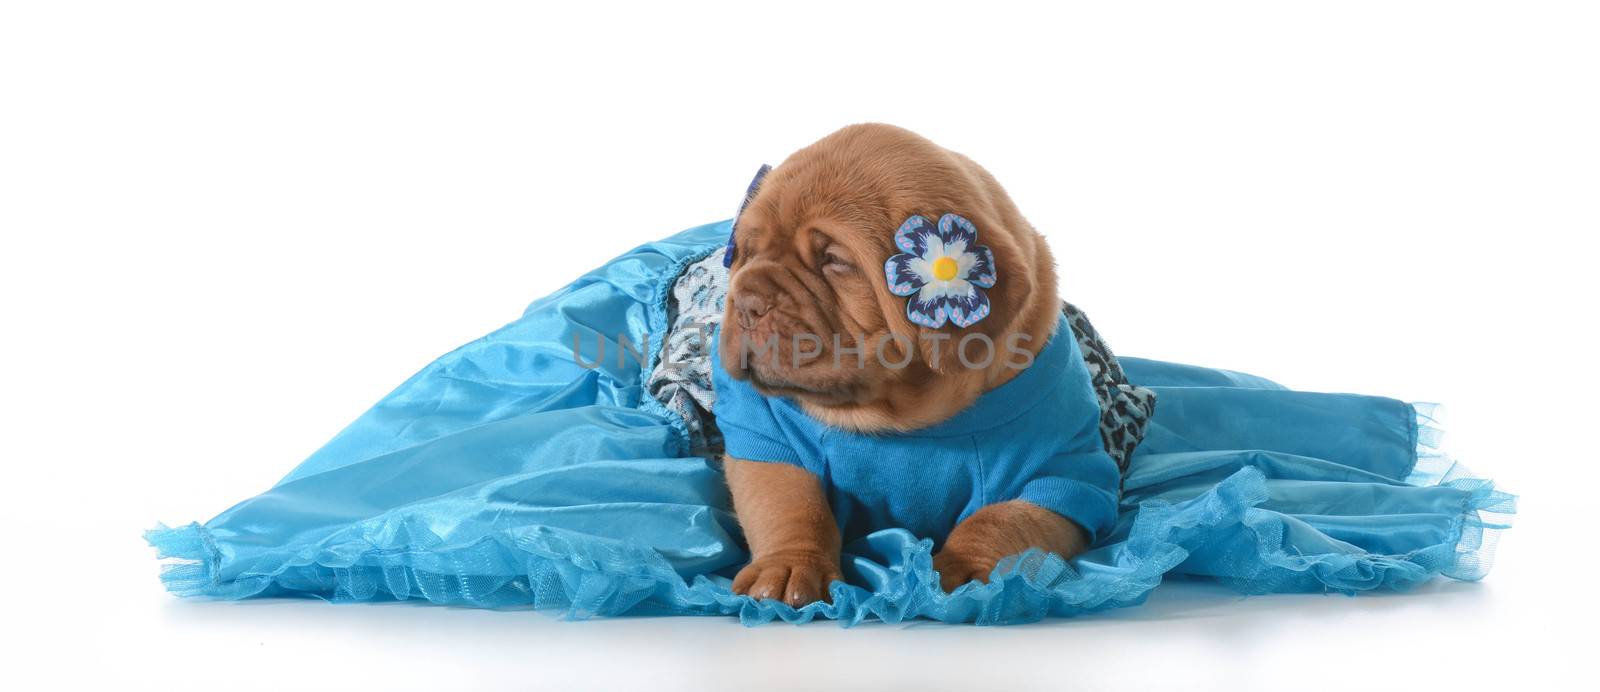 cute puppy - female dogue de bordeaux wearing blue dress on white background